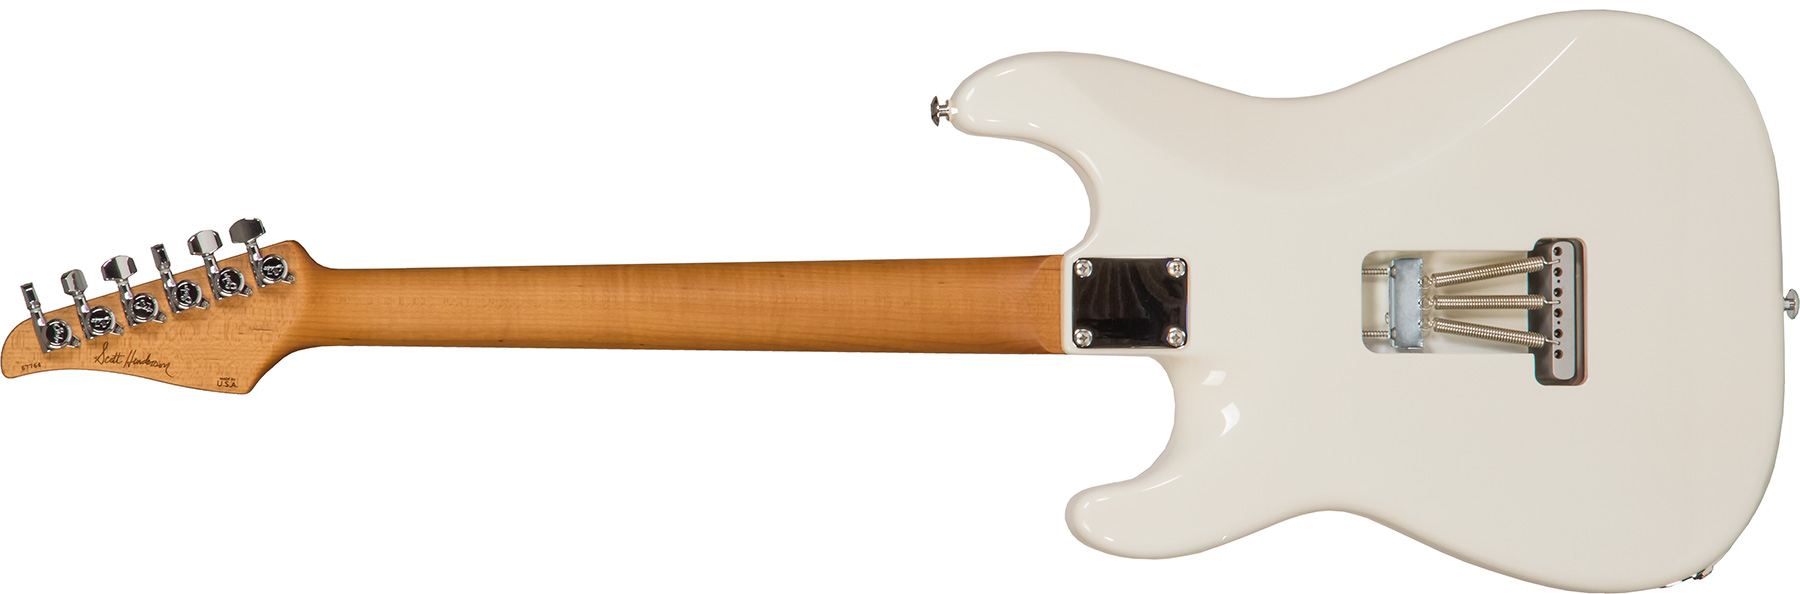 Suhr Scott Henderson Classic S 01-sig-0009 Signature 3s Trem Rw #67764 - Olympic White - Guitarra eléctrica con forma de str. - Variation 1